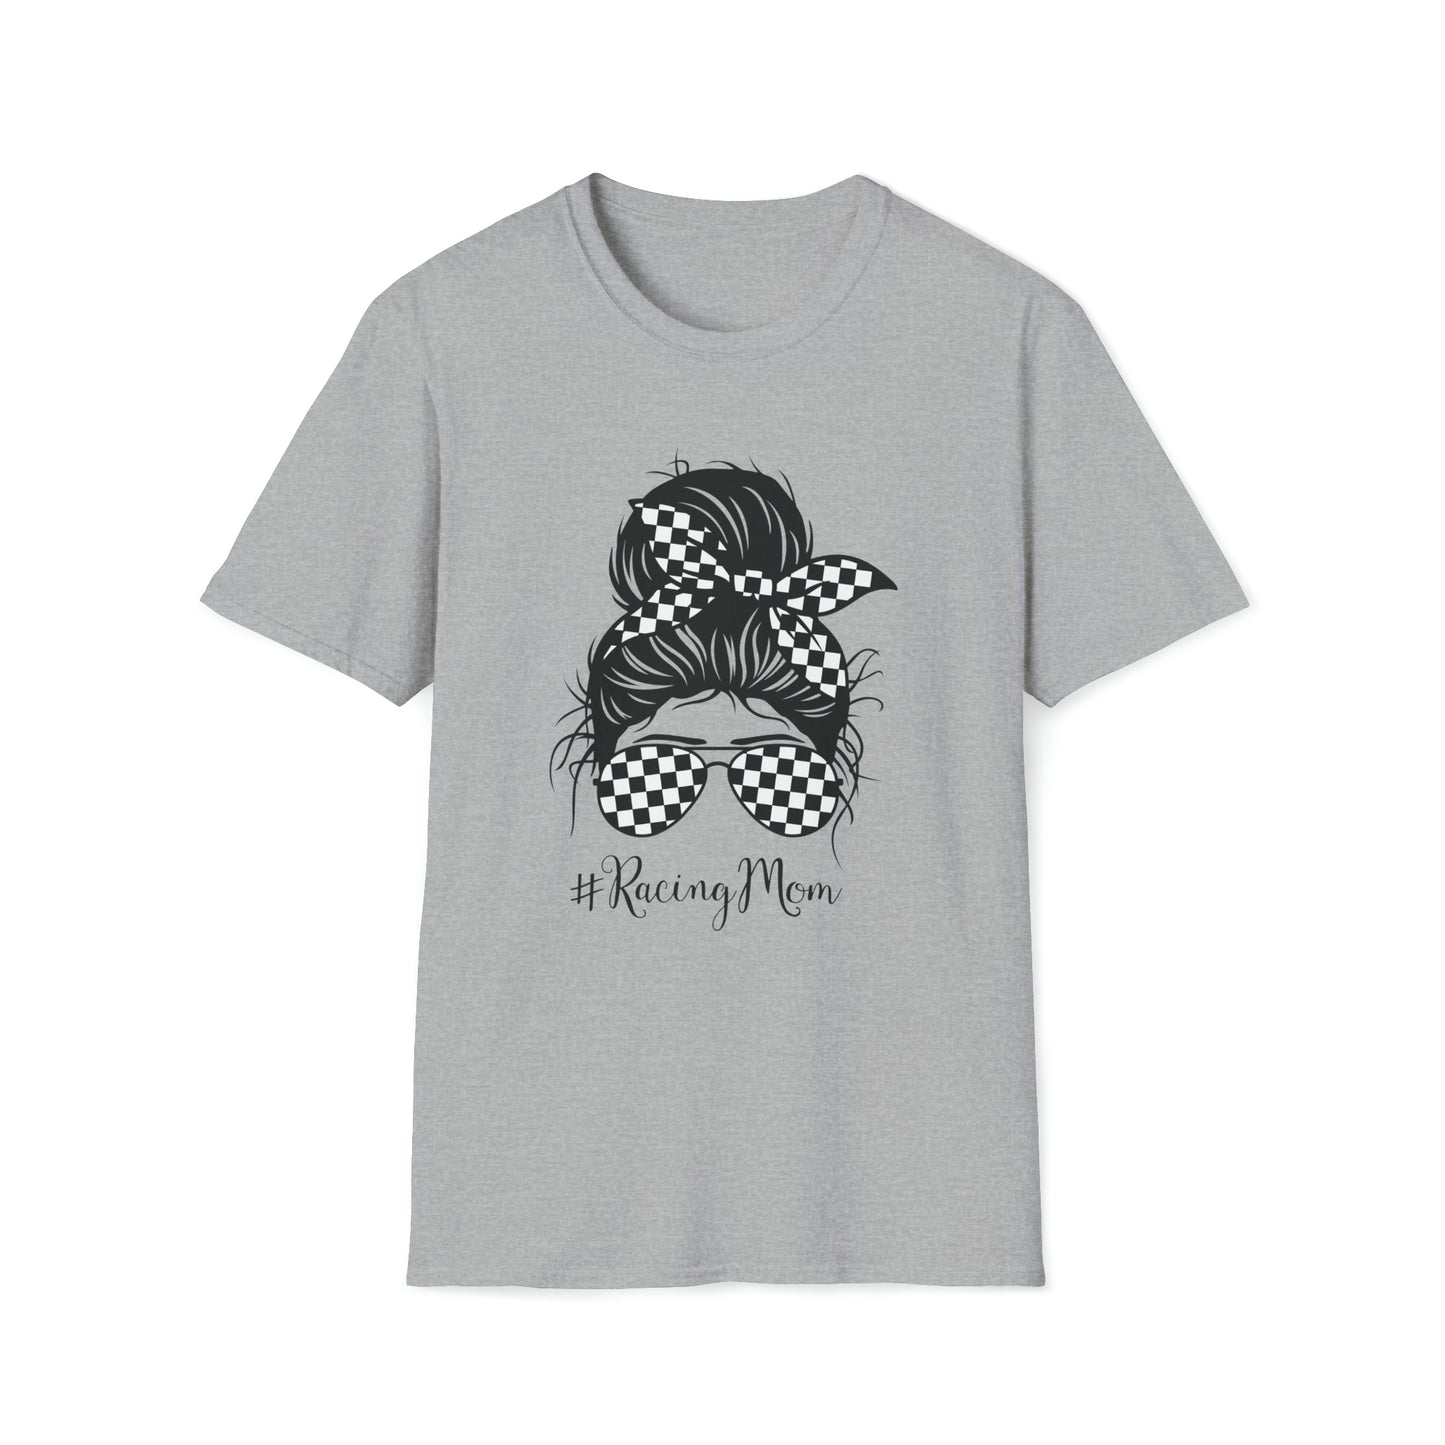 Racing Mom - Unisex Softstyle T-Shirt